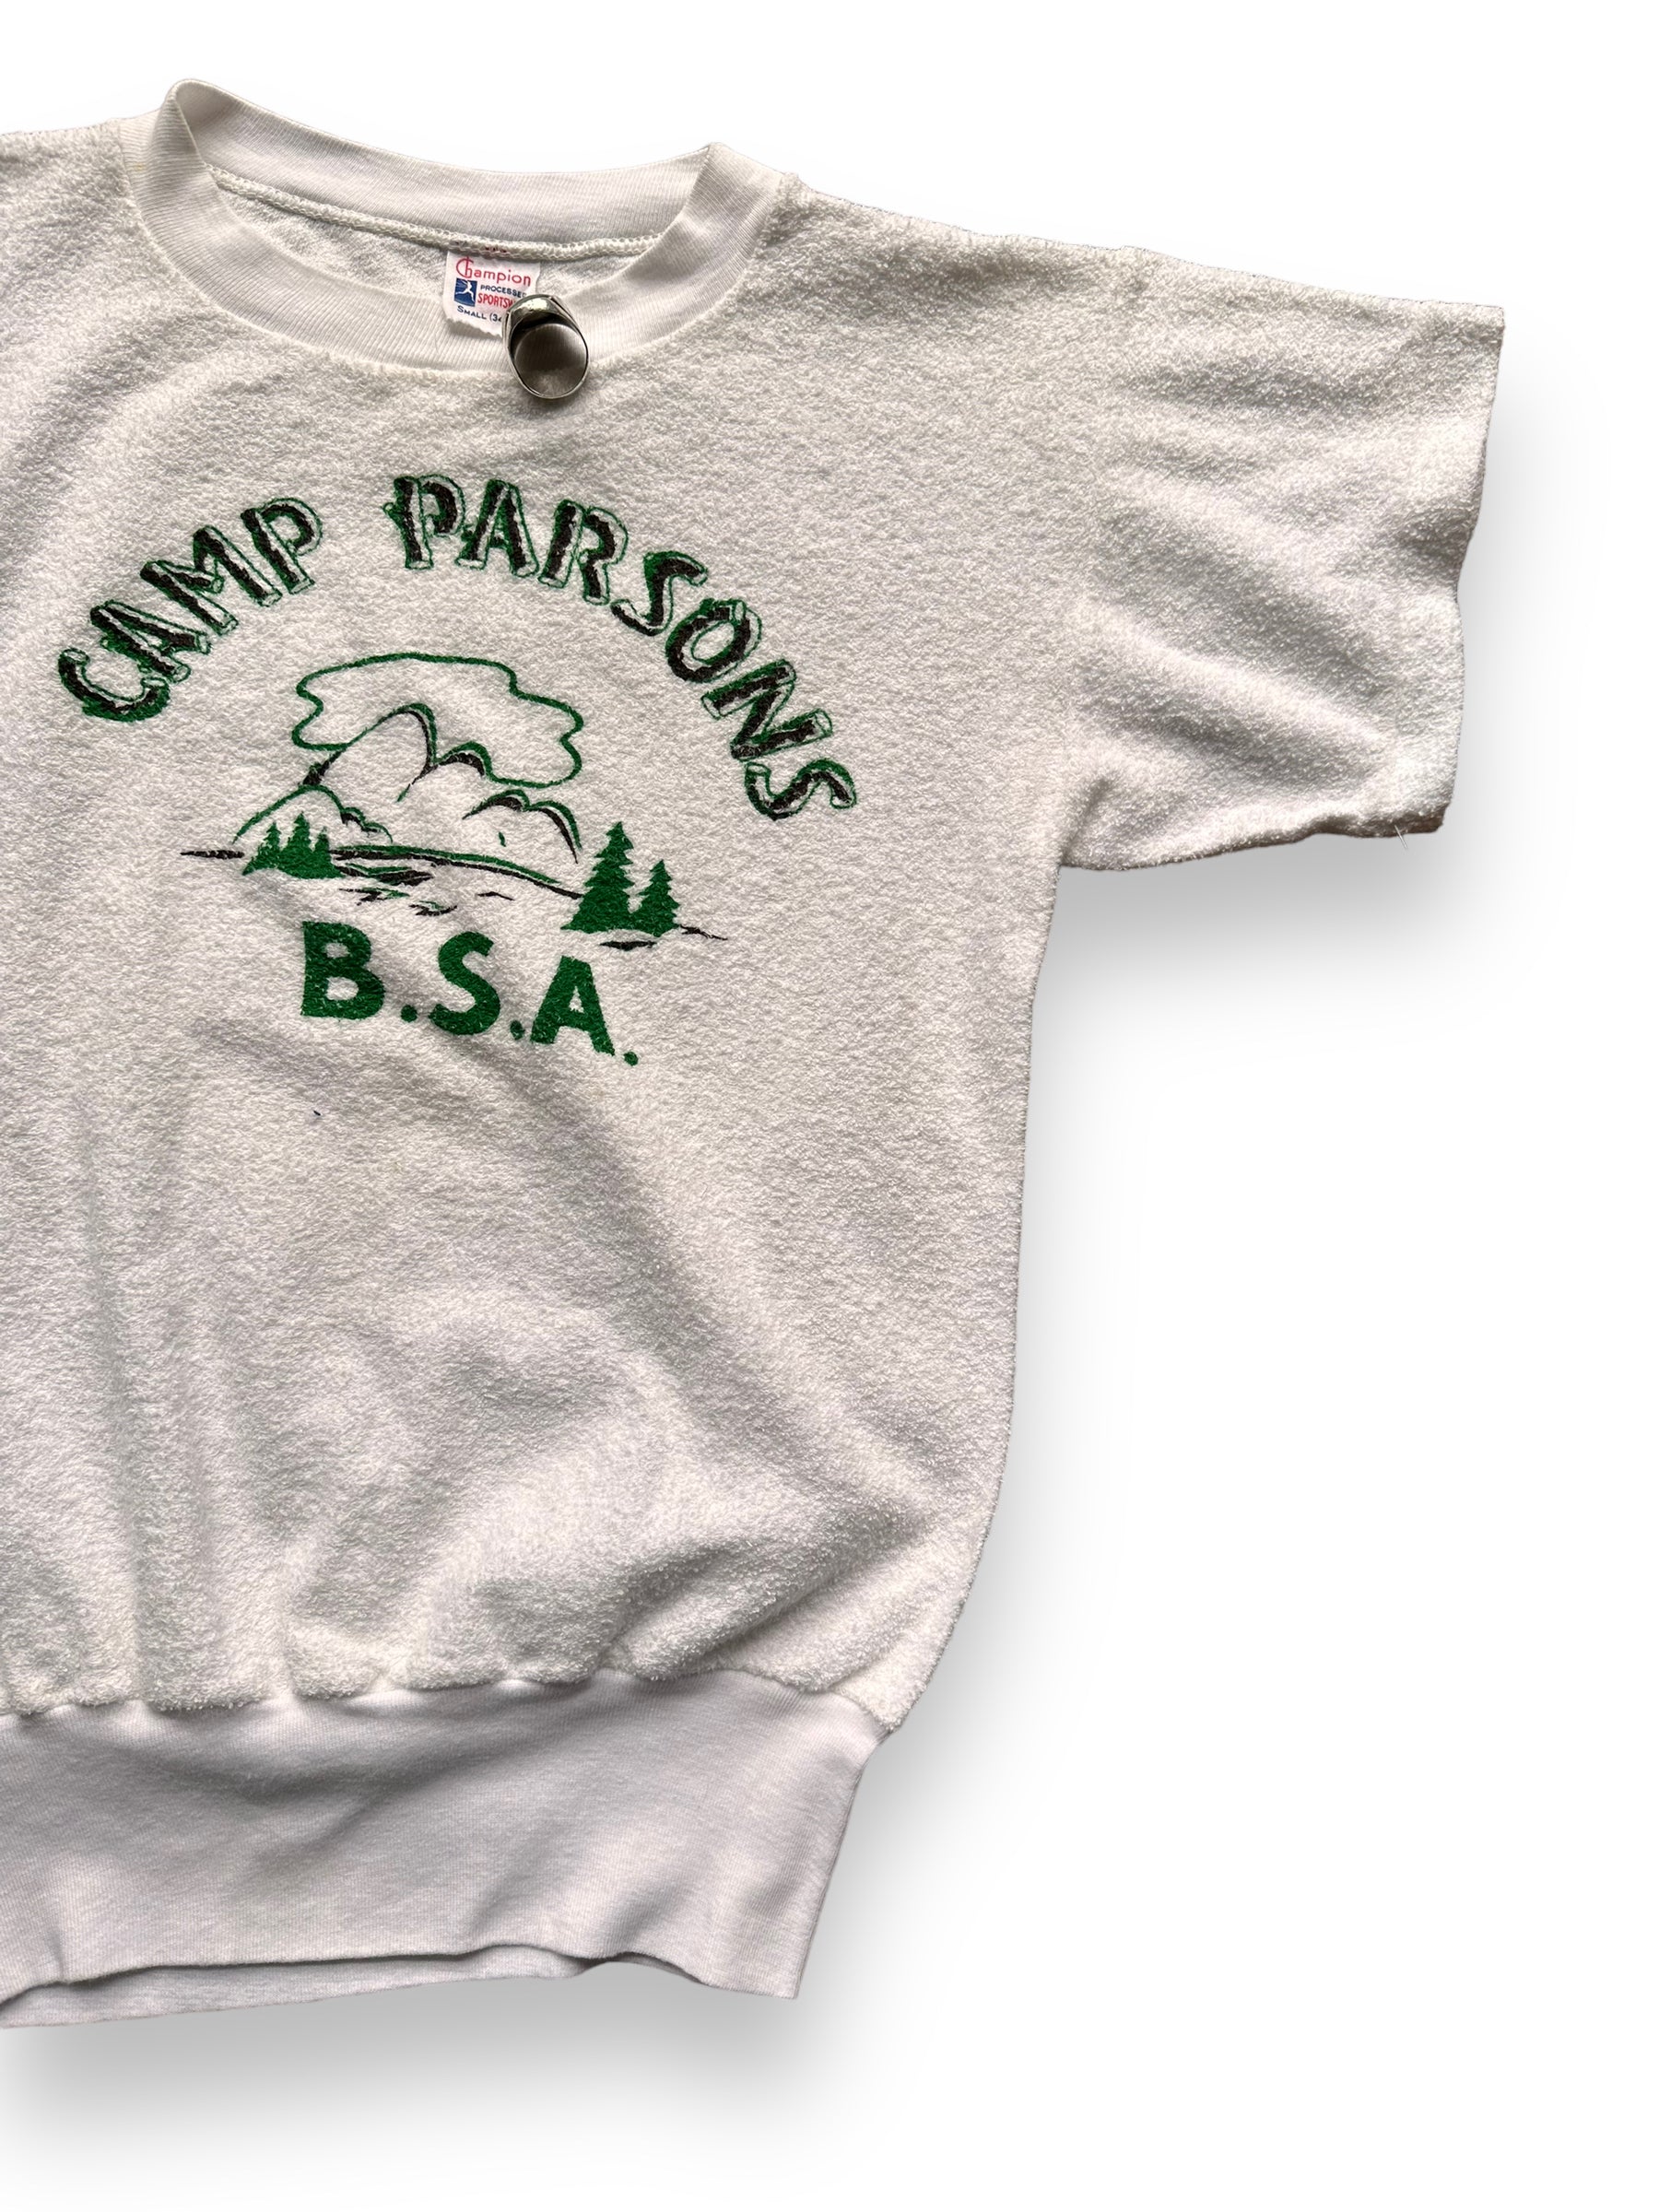 Front Left View of Vintage Champion Camp Parsons BSA Camp Terry Cloth Shirt SZ SM | Vintage Boy Scout Camp Shirt | Seattle Vintage Clothing